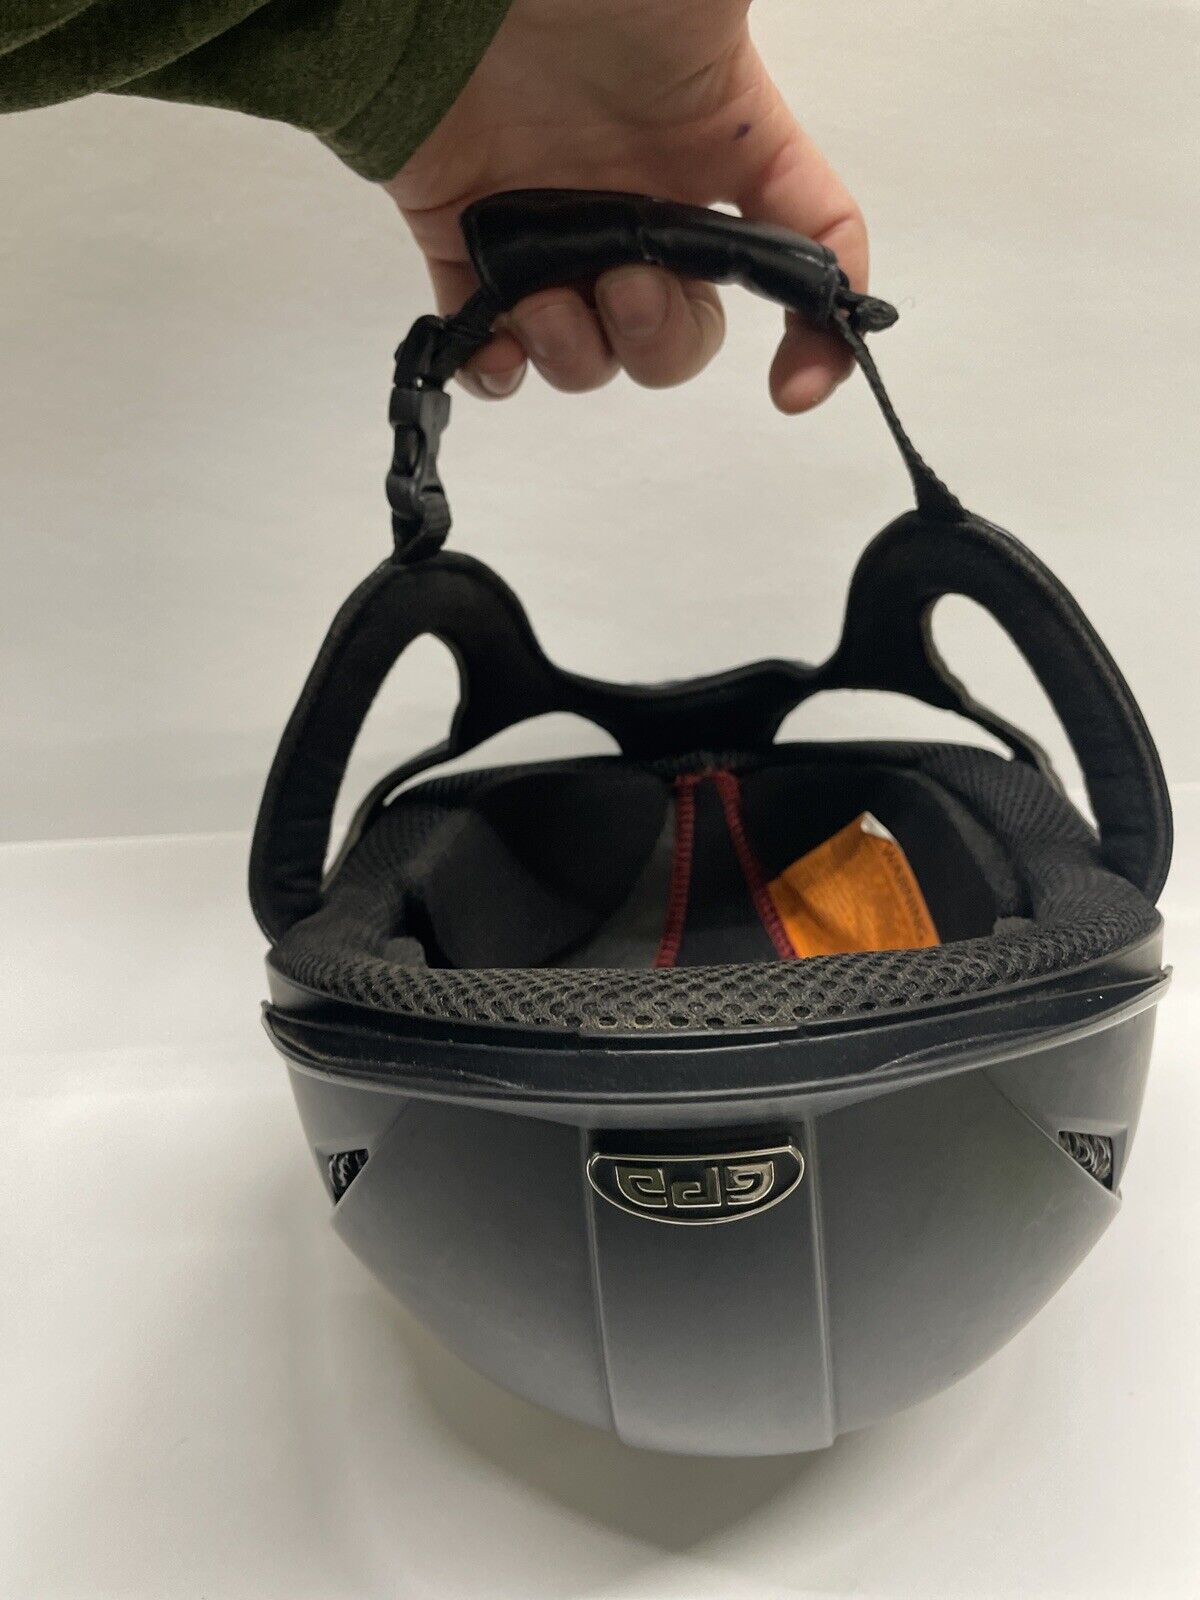 GPA Easy 2X Black Matte Horseback Riding Helmet, Size 7-1/4 or 59, With Bag